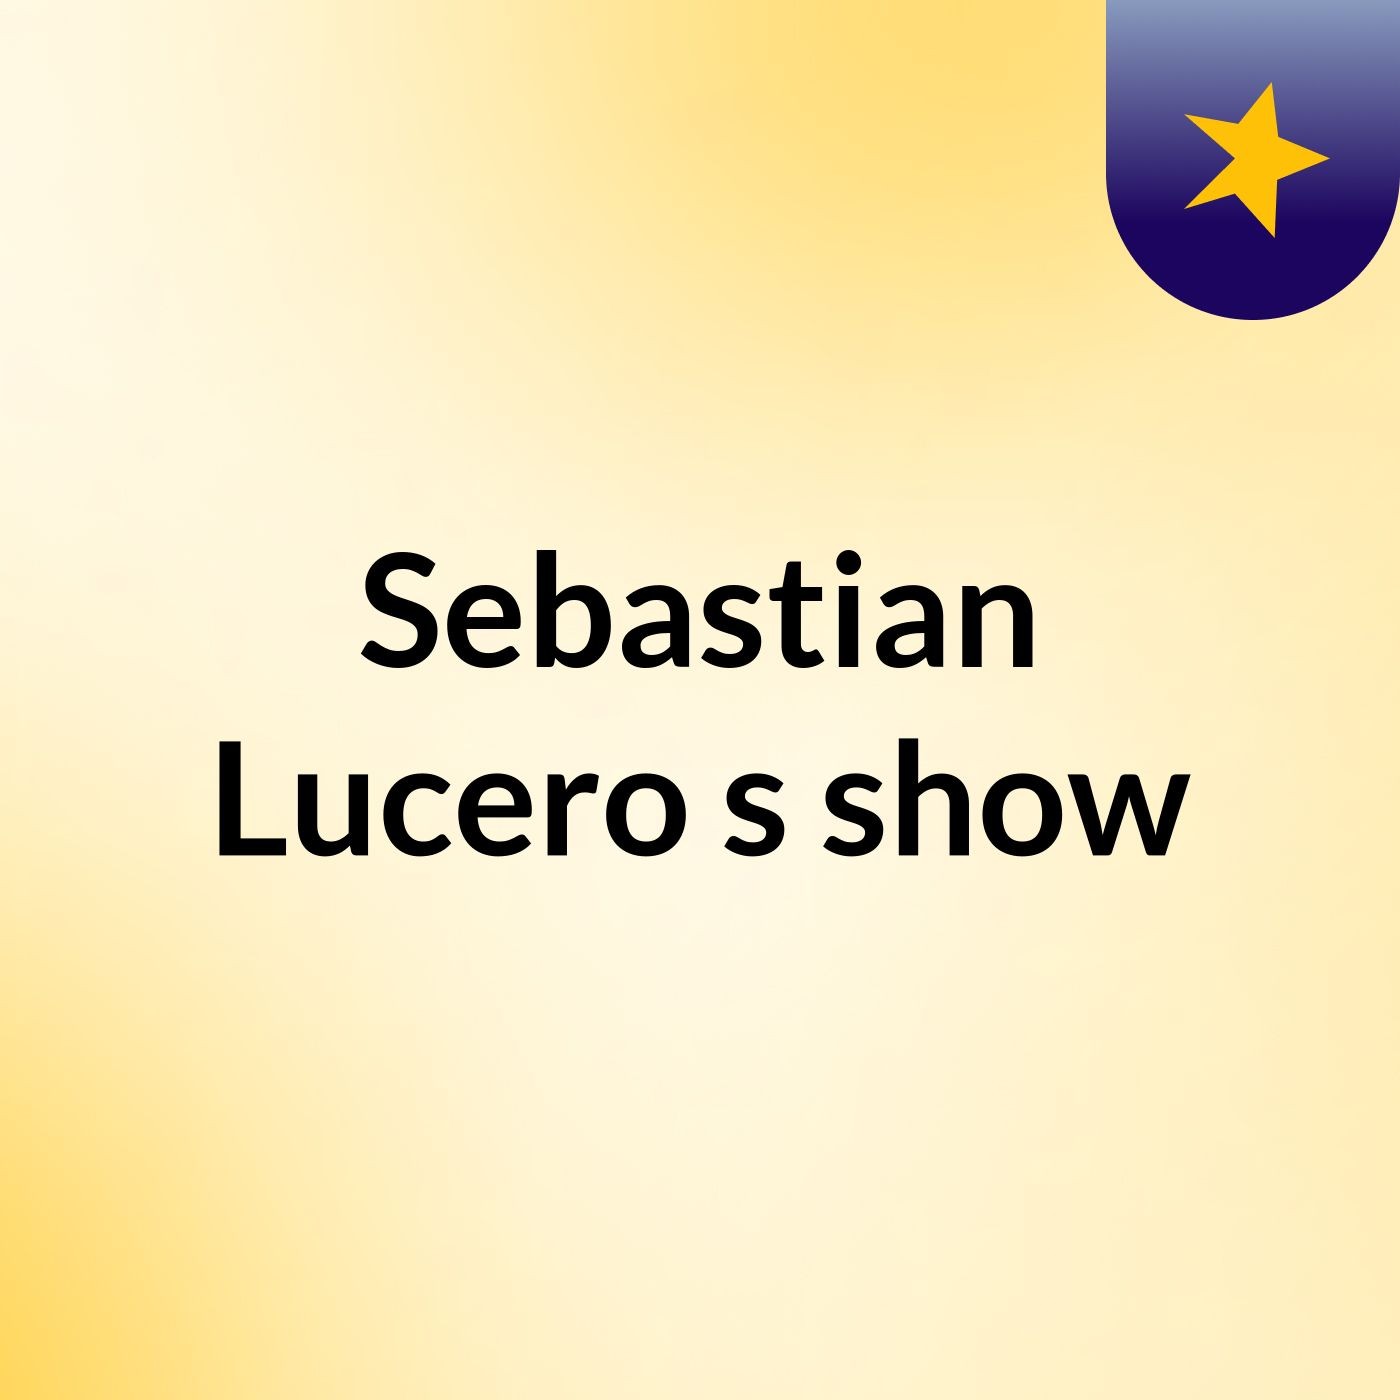 Sebastian Lucero's show